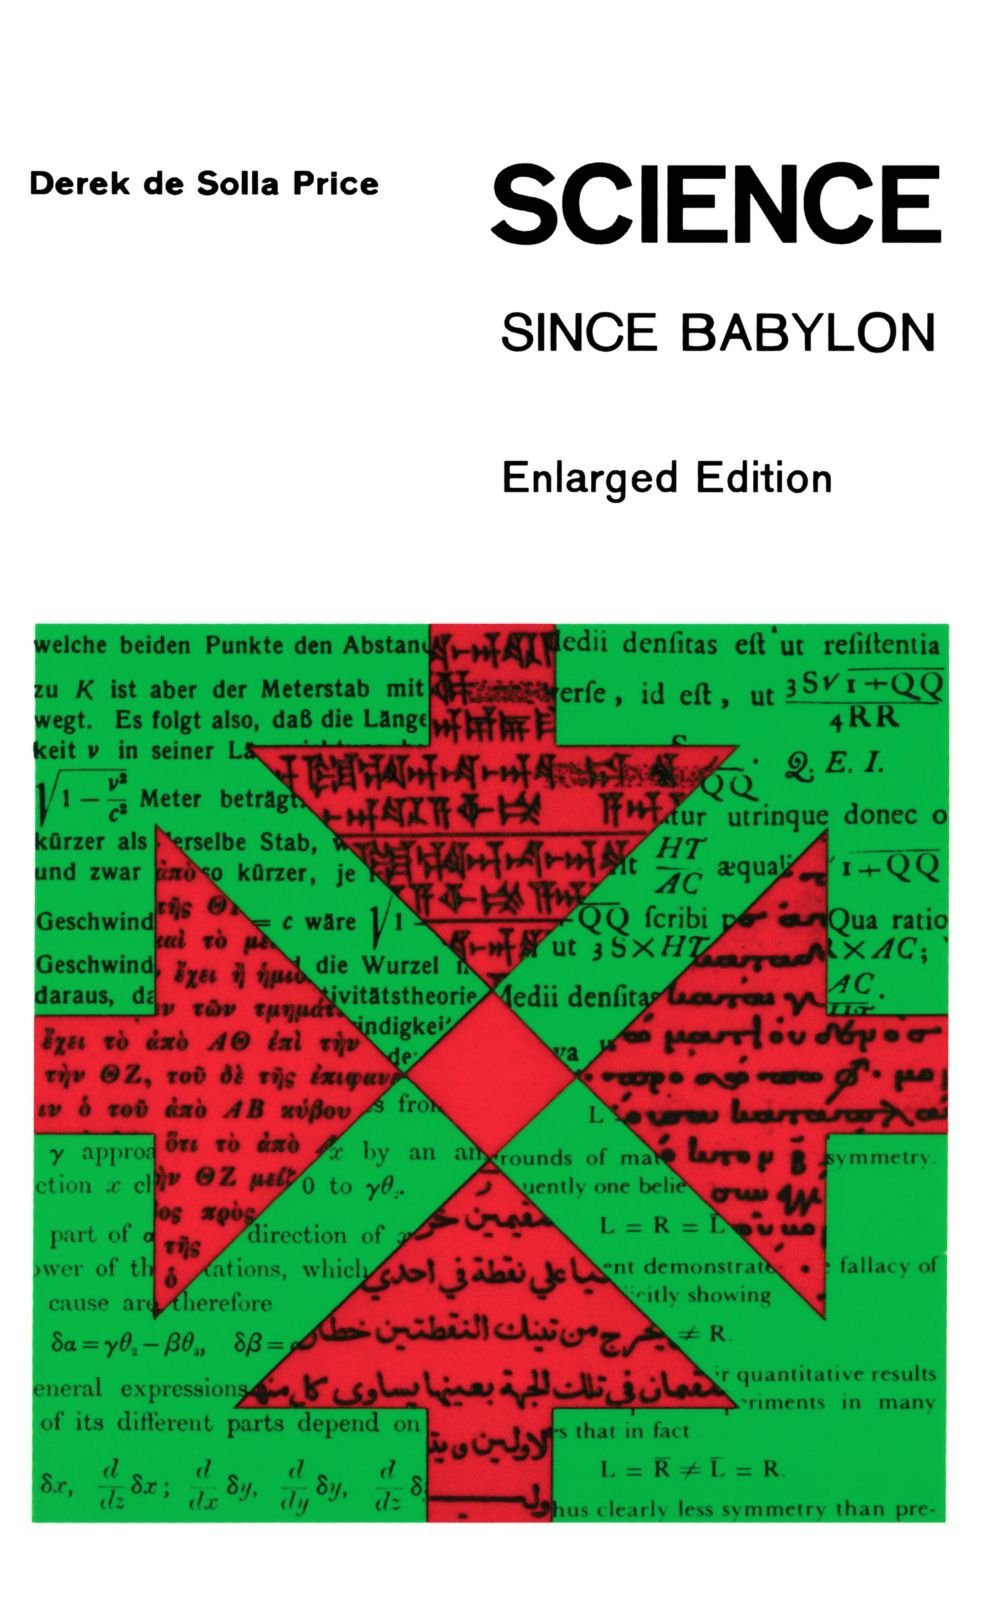 Science Since Babylon (Enlarged Edition): Amazon.co.uk: De Solla Price,  Derek: 9780300017984: Books